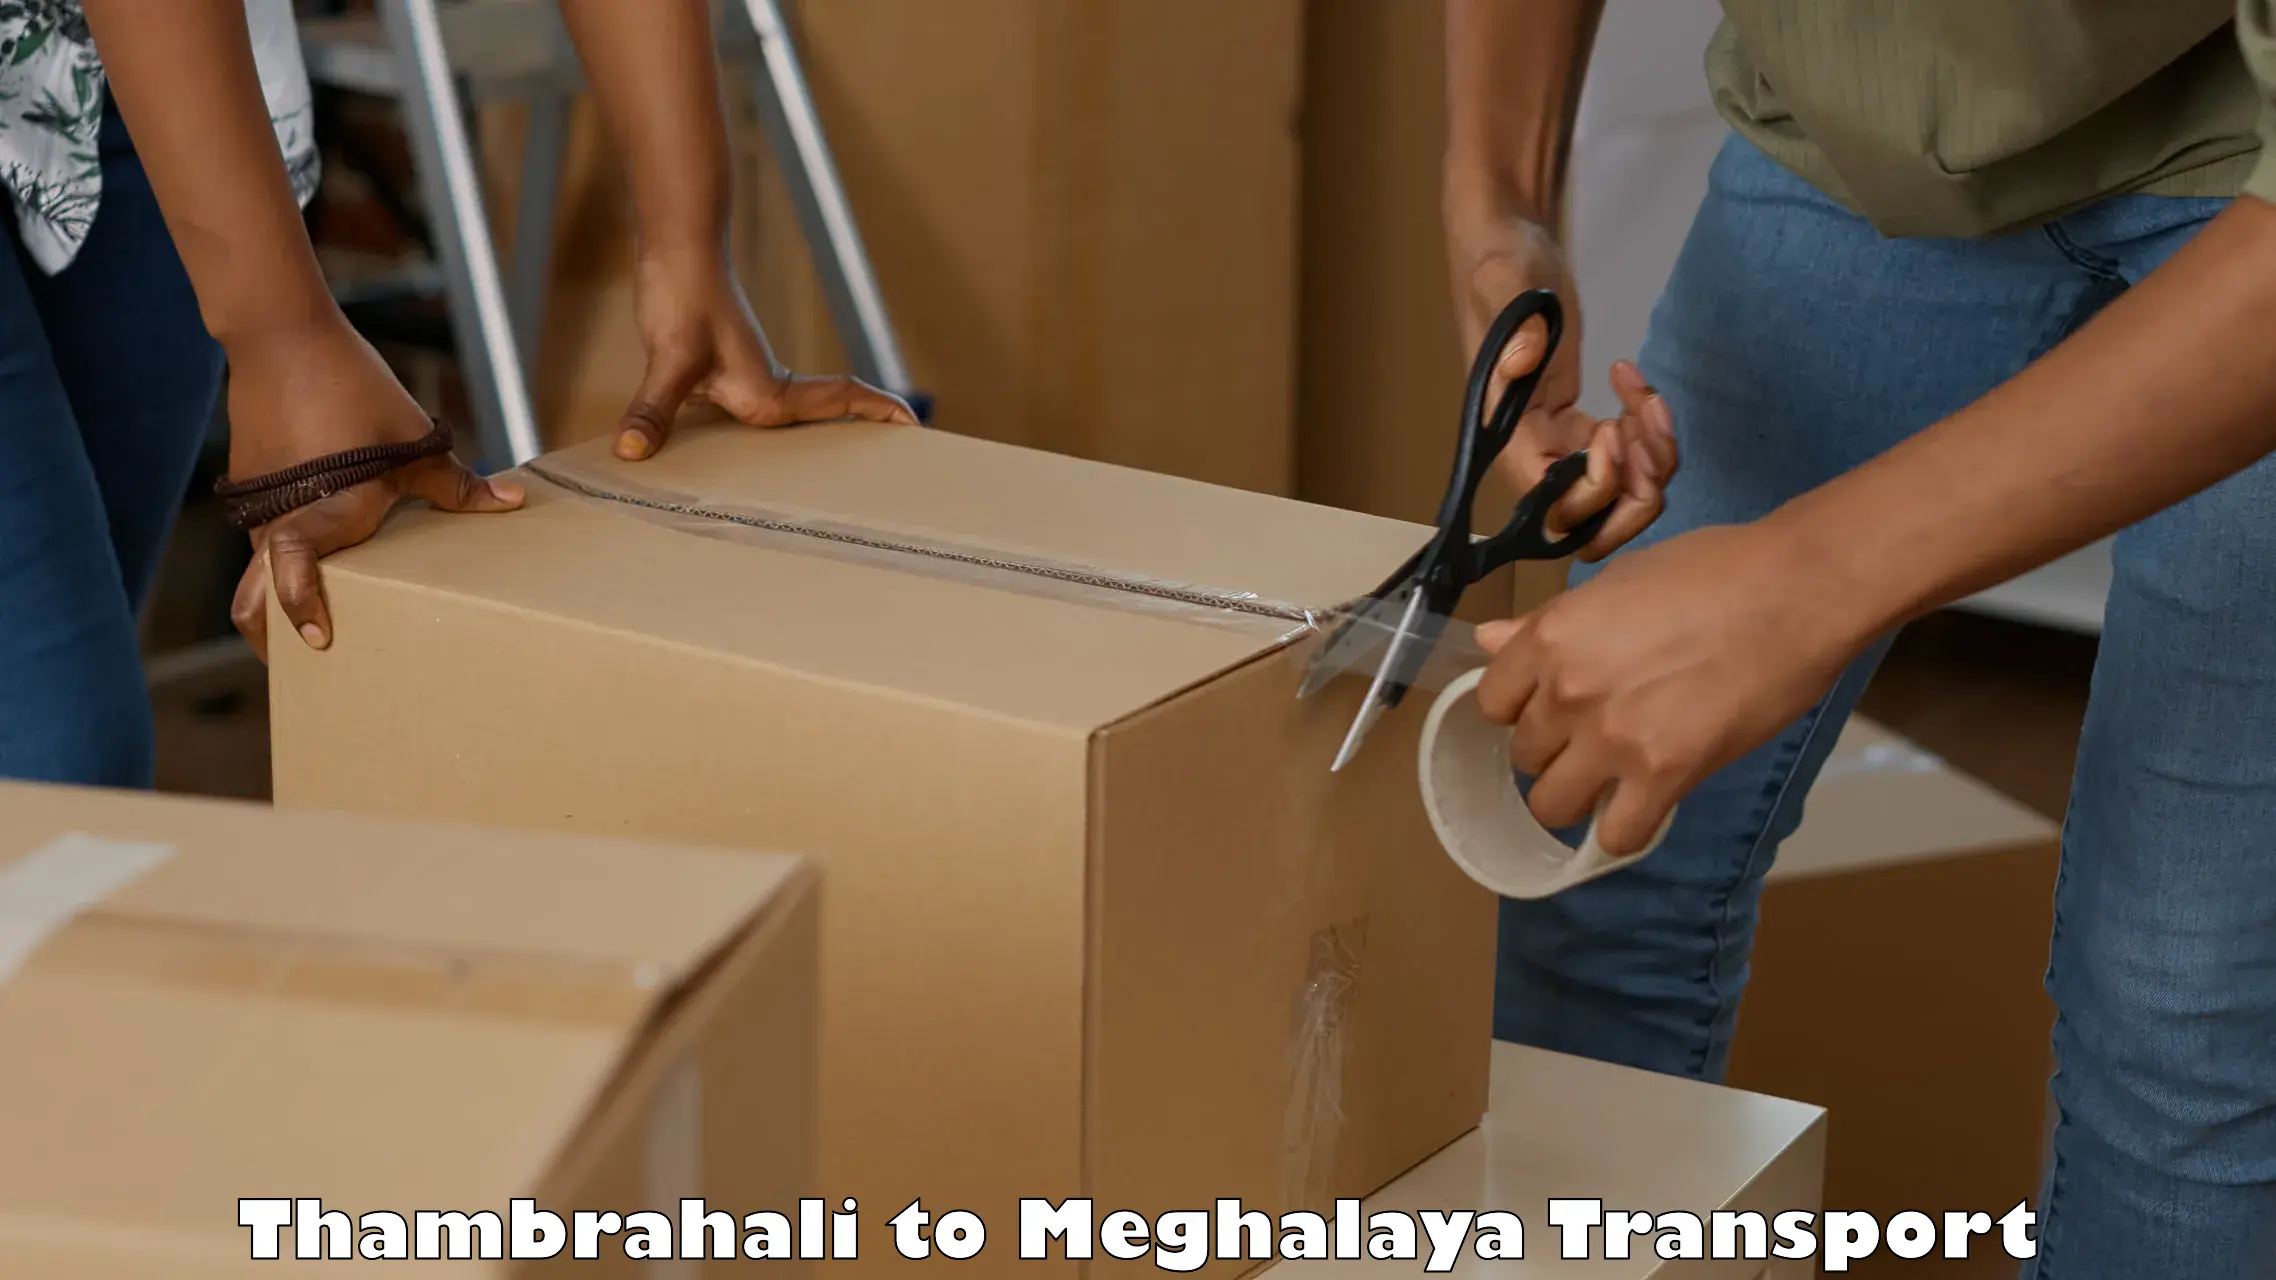 Furniture transport service Thambrahali to Tura